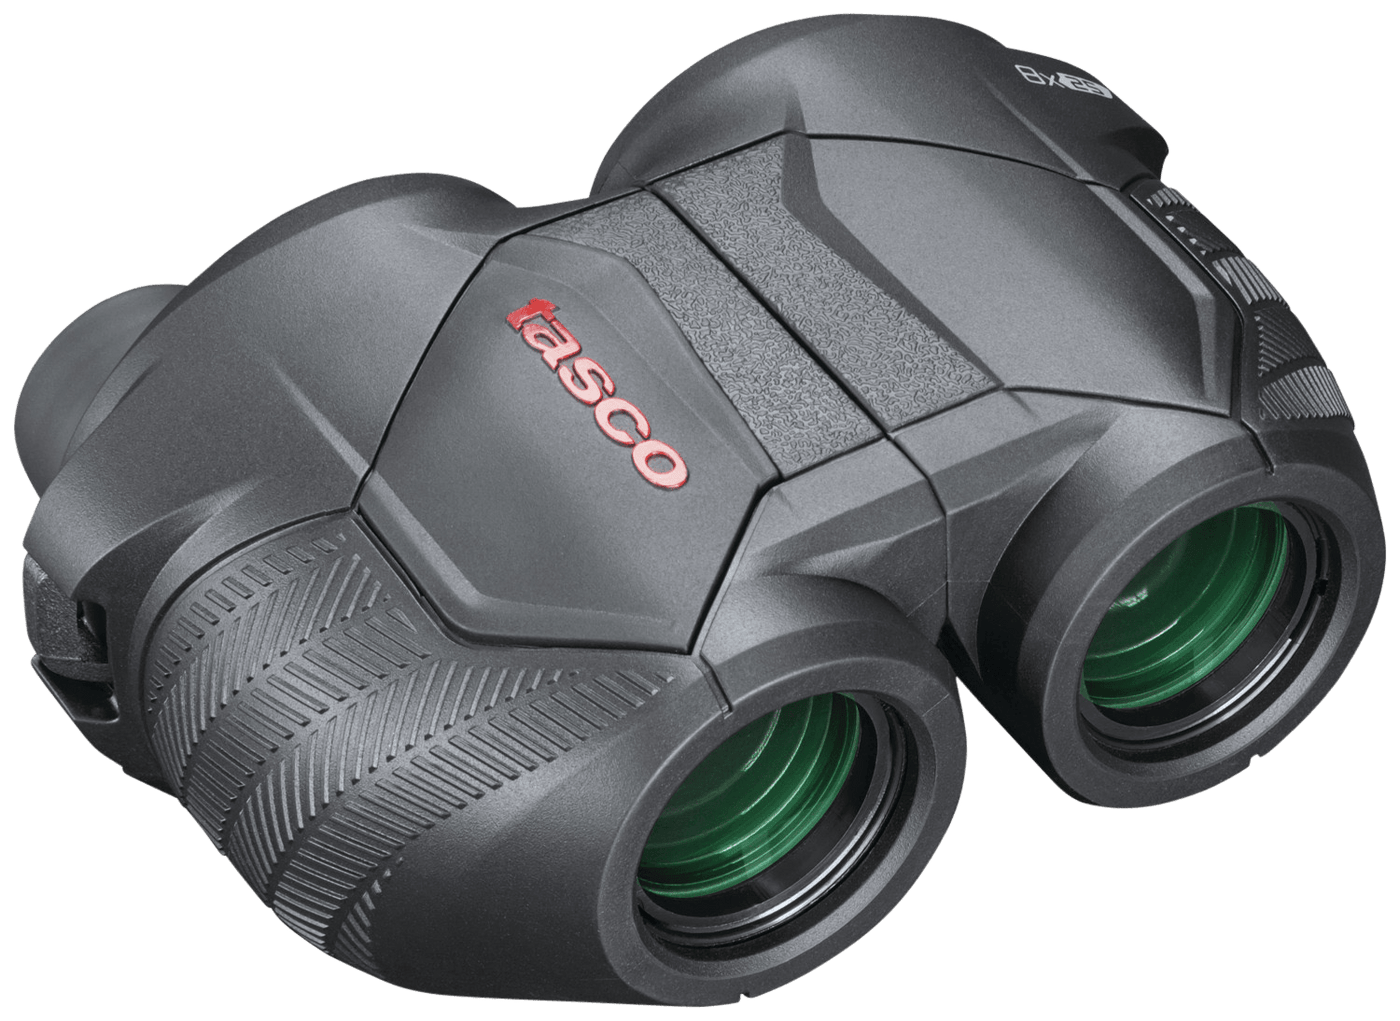 Tasco Tasco Focus Free, Tas 100825  Black Focus Free Bino 8x25 Optics